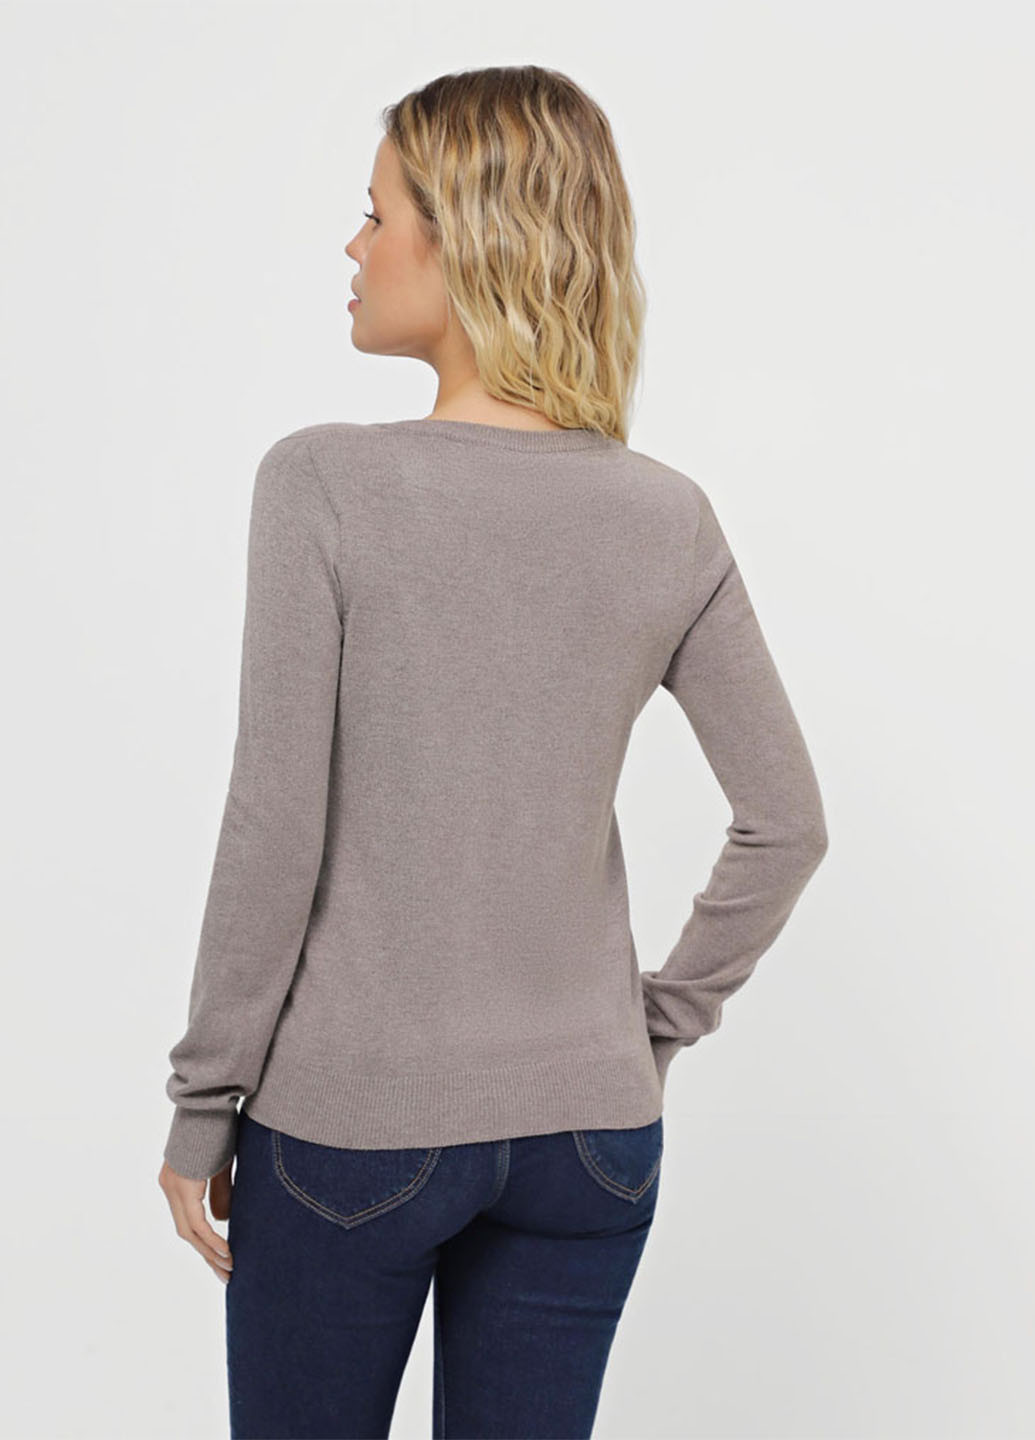 Серо-бежевый демисезонный пуловер пуловер Promin